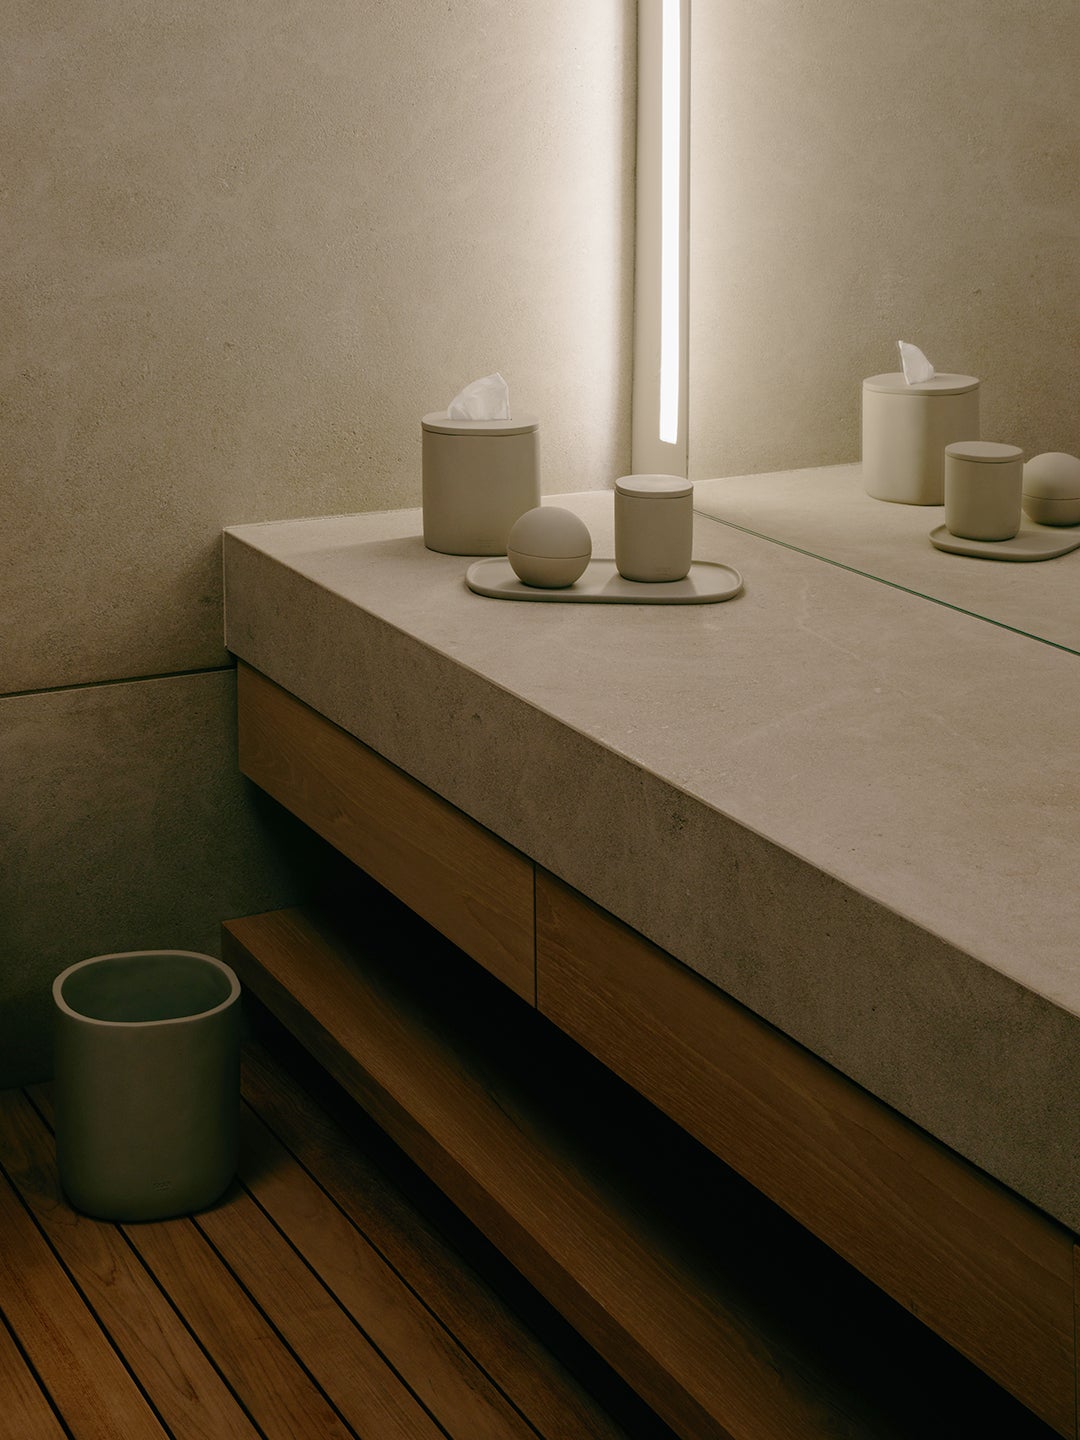 Bathroom countertop with concrete vessels